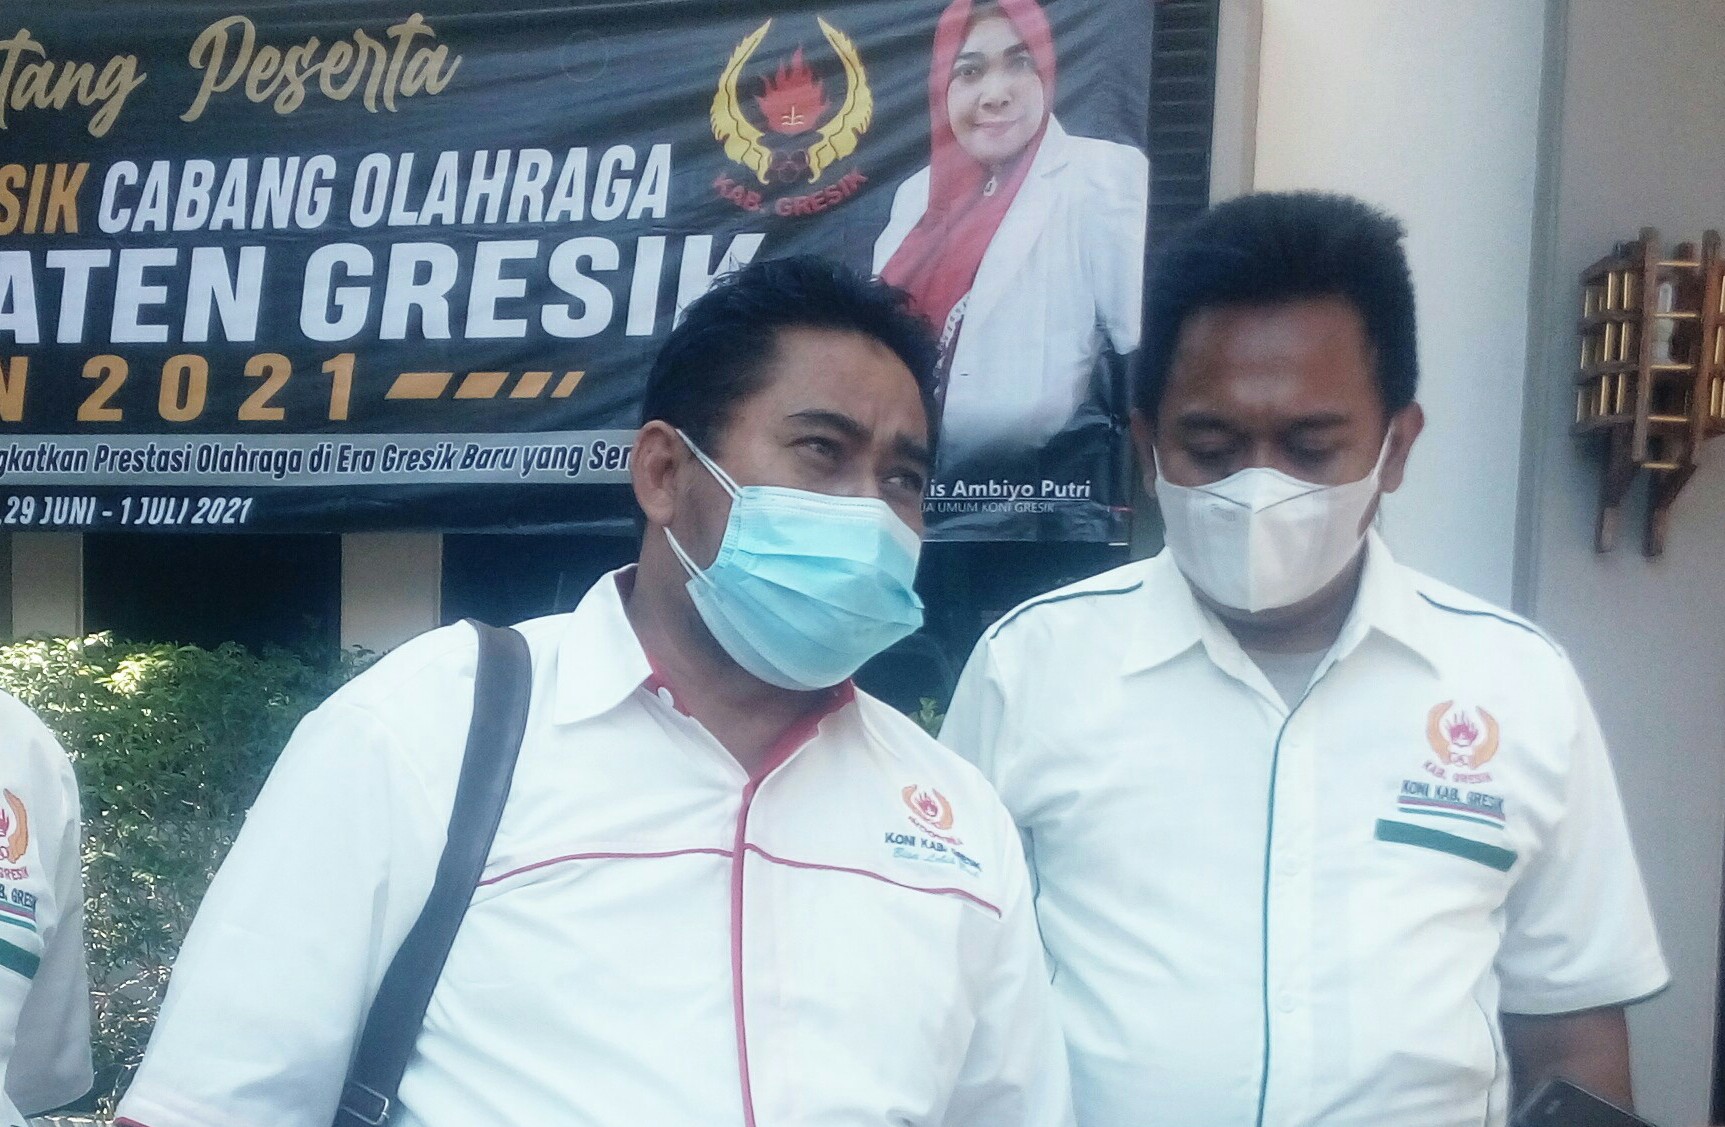 Wakil ketua KONI Gresik bidang pembinaan dan prestasi Andik Widianarto (tengah) dan sekretaris KONI Gresik Imam Junaidi (kanan) di pendopo alun-alun, Selasa (29/6/2021).